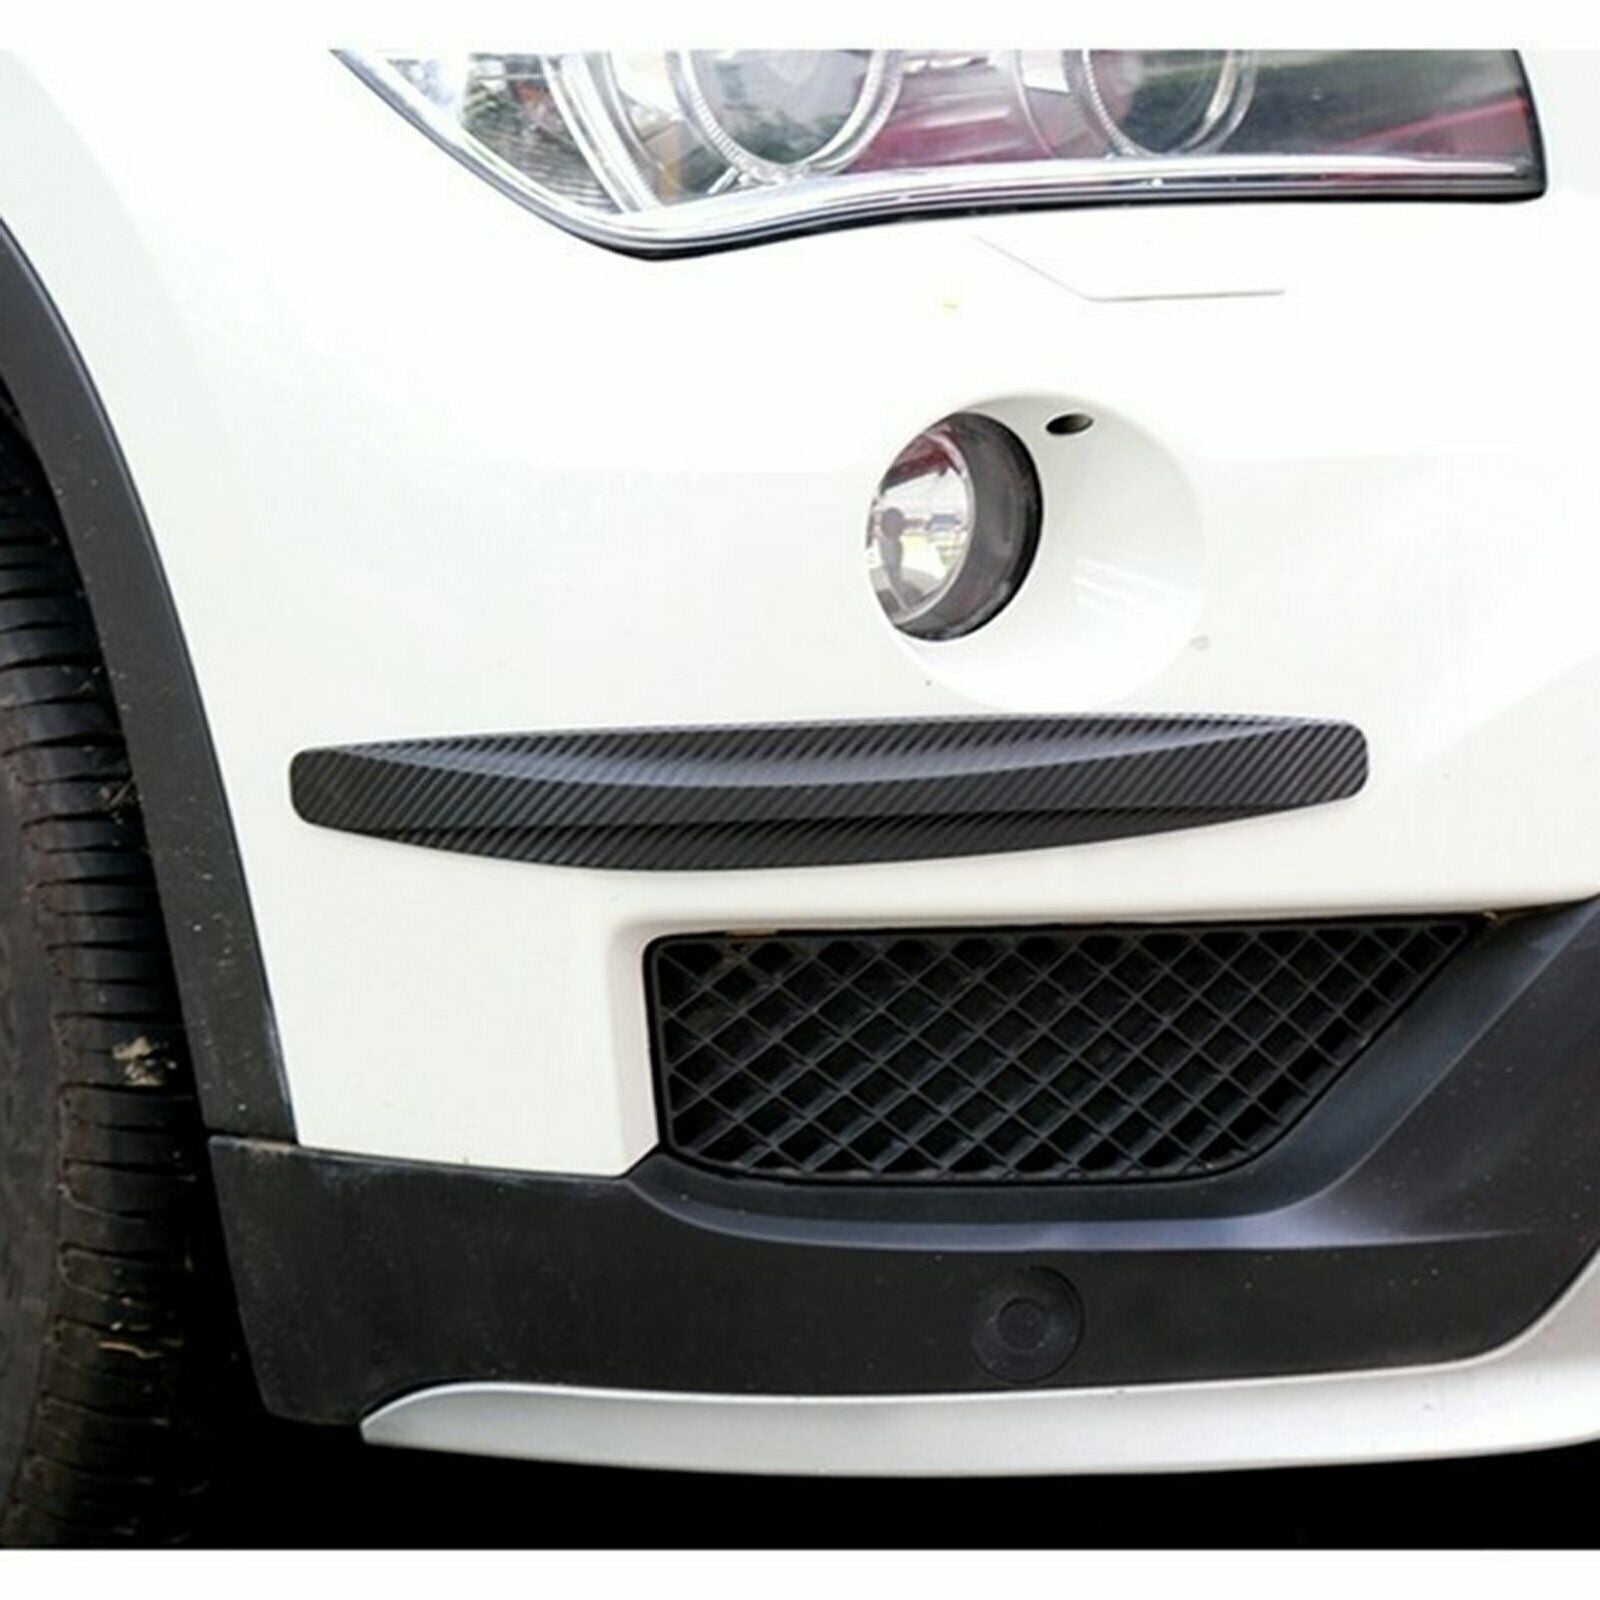 Free shipping- 2pcs Car Carbon Fiber Anti-rub Unique Black Strip Bumper Corner Protector Guard